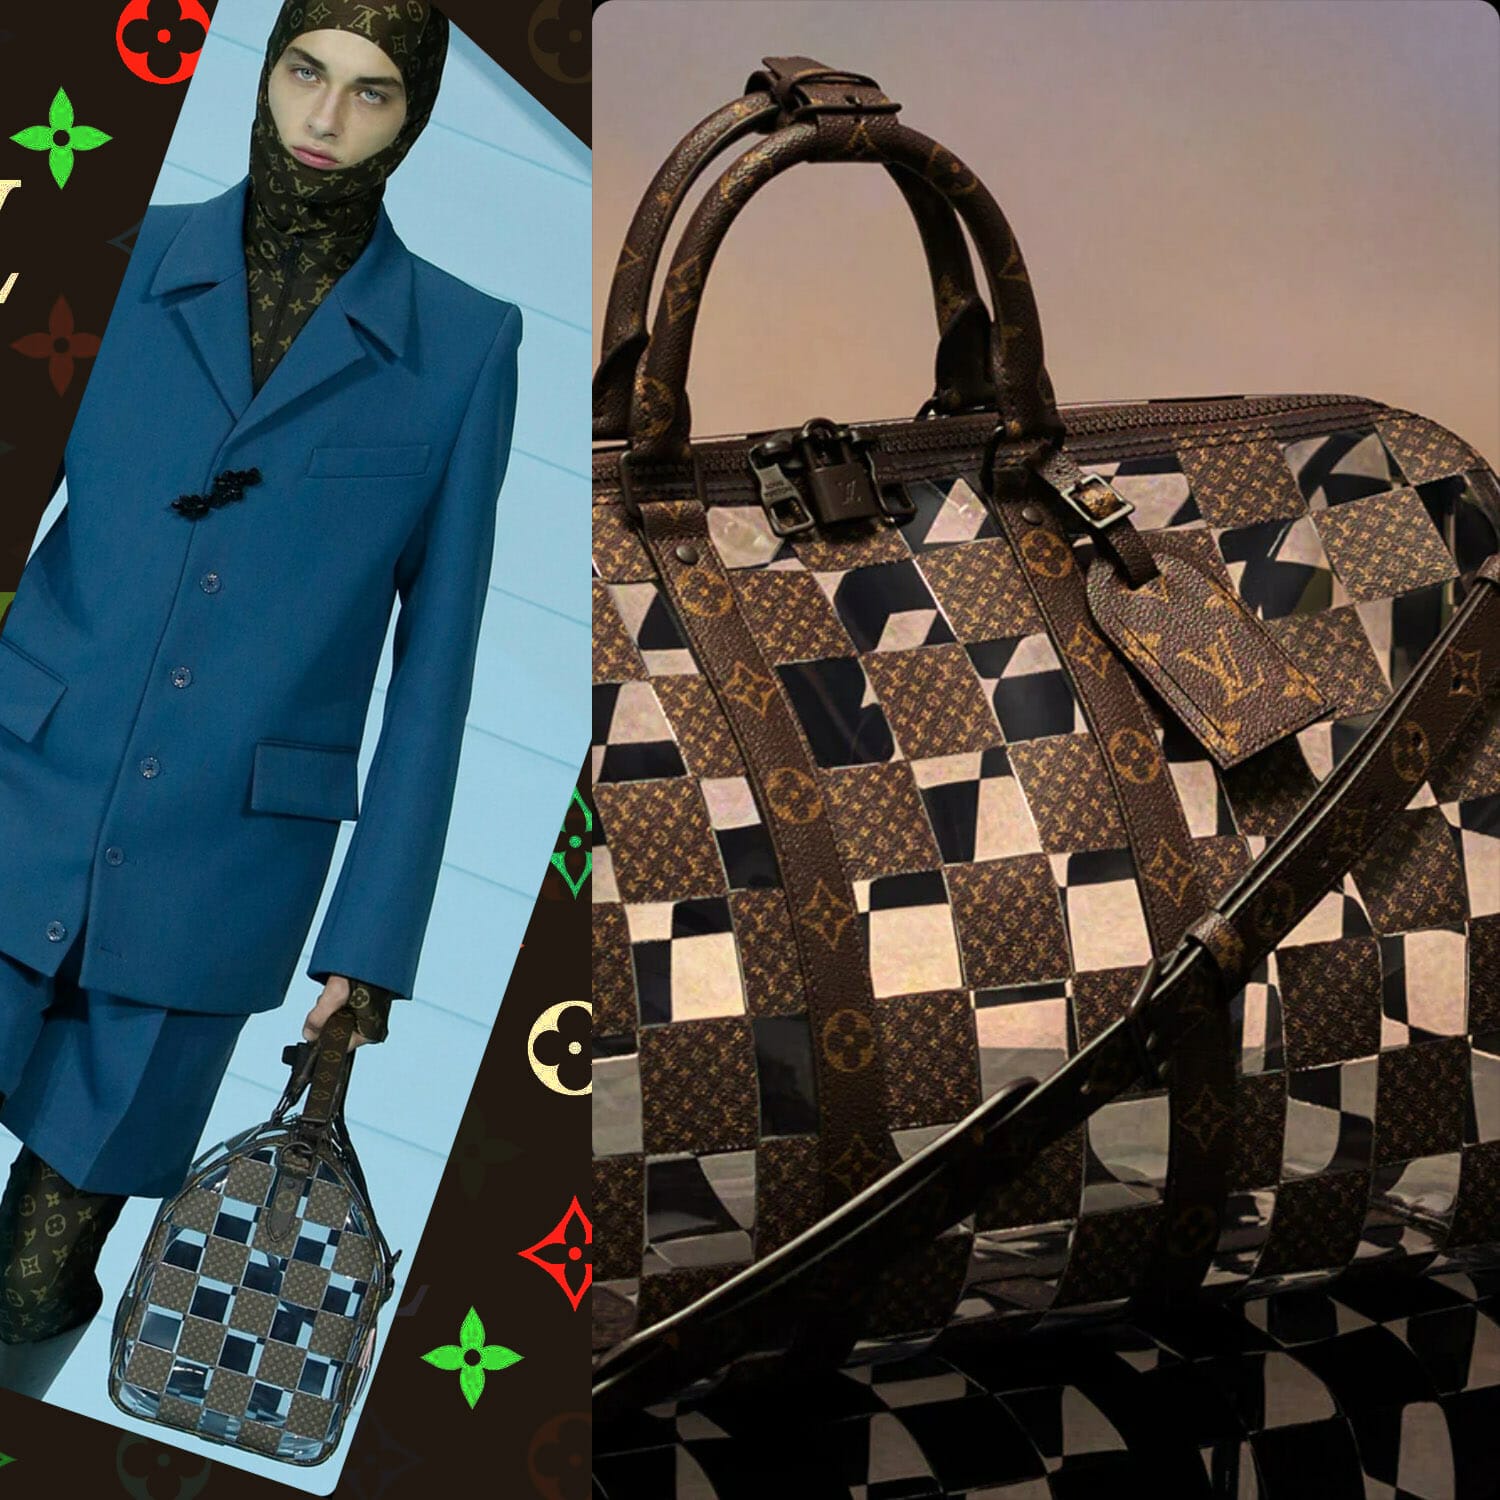 Louis Vuitton Fall Bag Unboxing 2023 